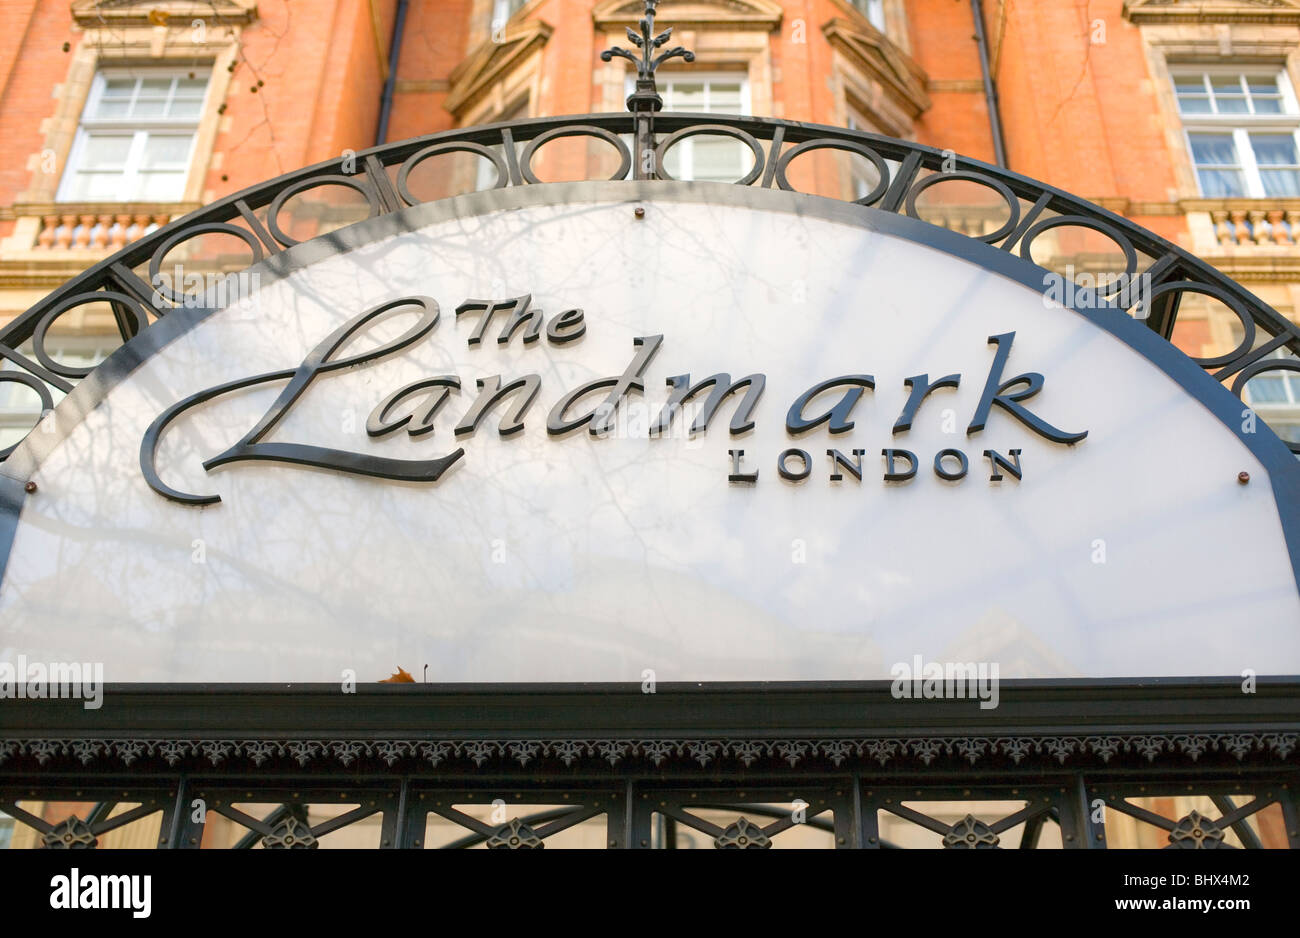 L'Hotel Landmark Marylebone Road, Londres, Angleterre, Royaume-Uni, Europe Banque D'Images